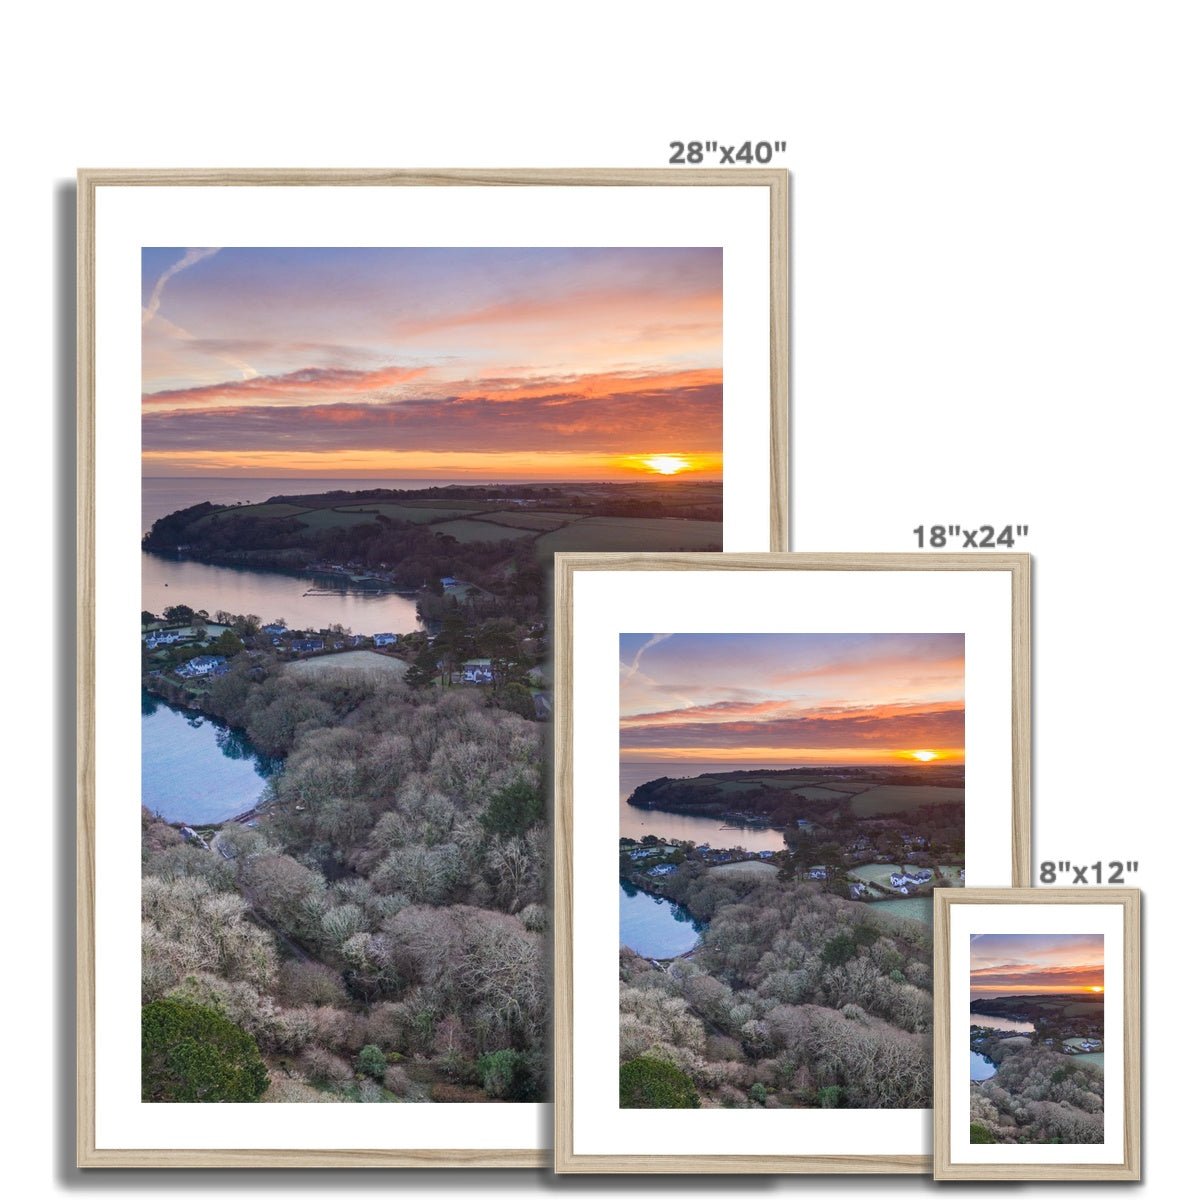 frenchmans creek sunrise framed photograph